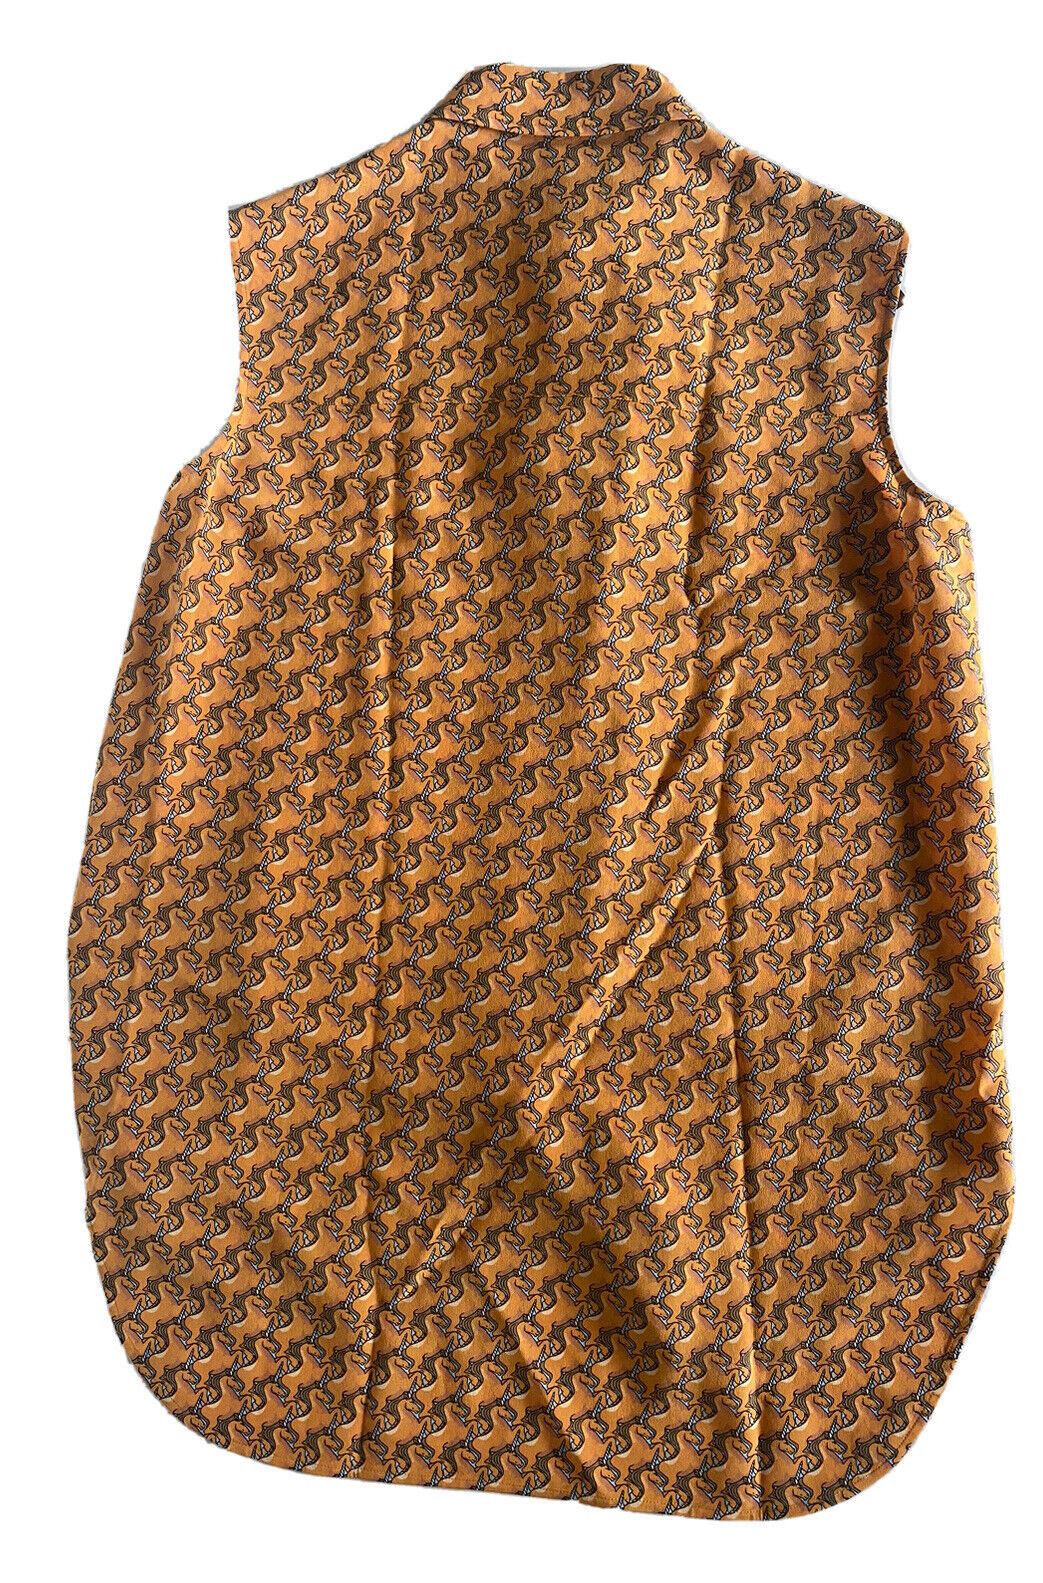 NWT $890 Burberry Women's Bright Melon Button-Up Shirt 6 US (8 UK) 80324481